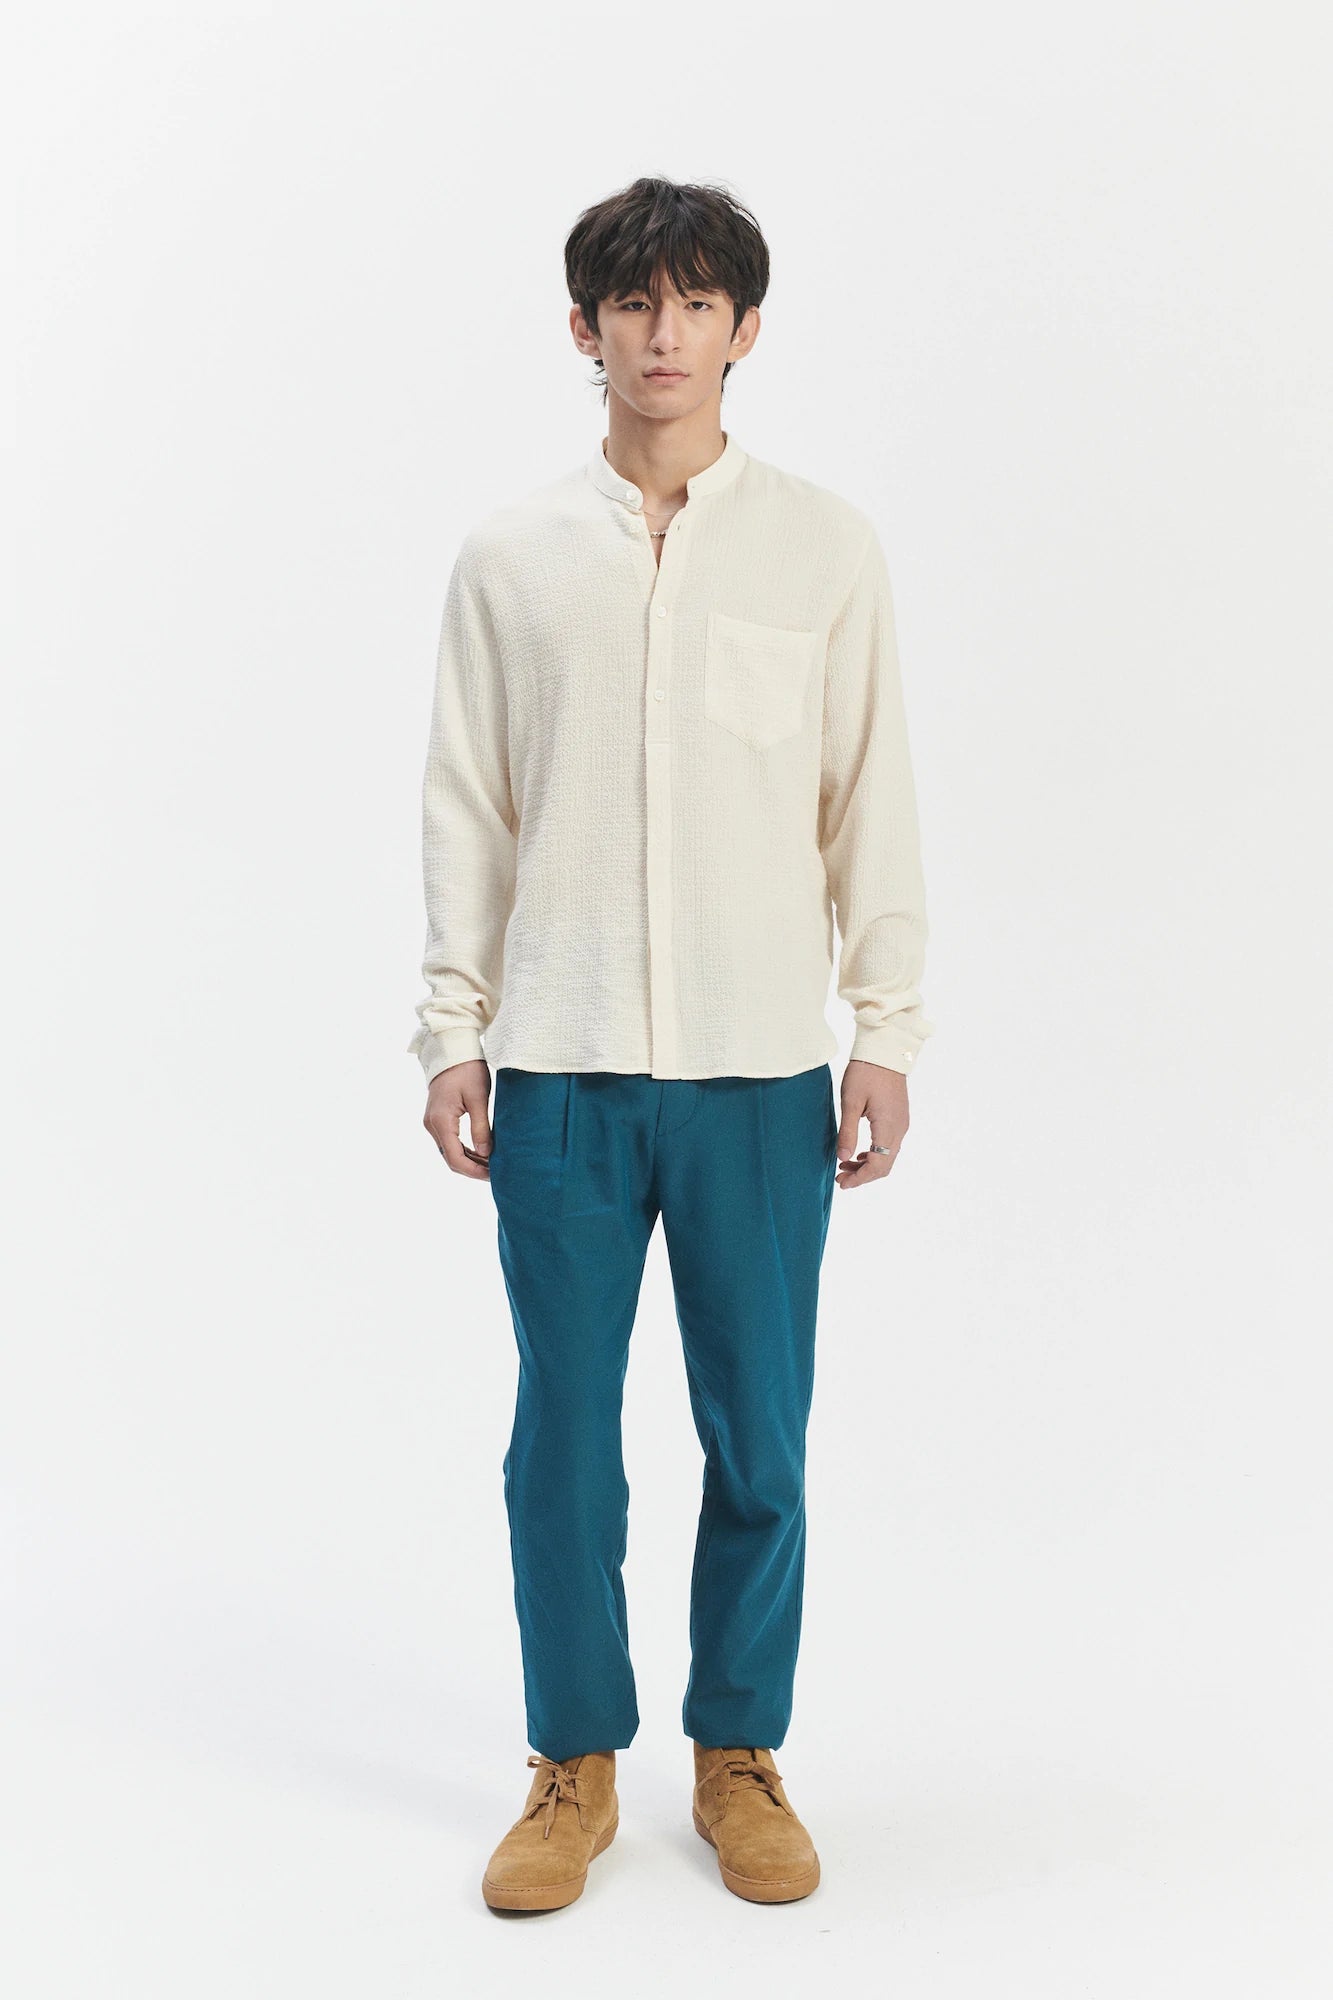 zen-grandad-collar-shirt-in-the-finest-portuguese-cashmere-and-cotton-creamy-seersucker